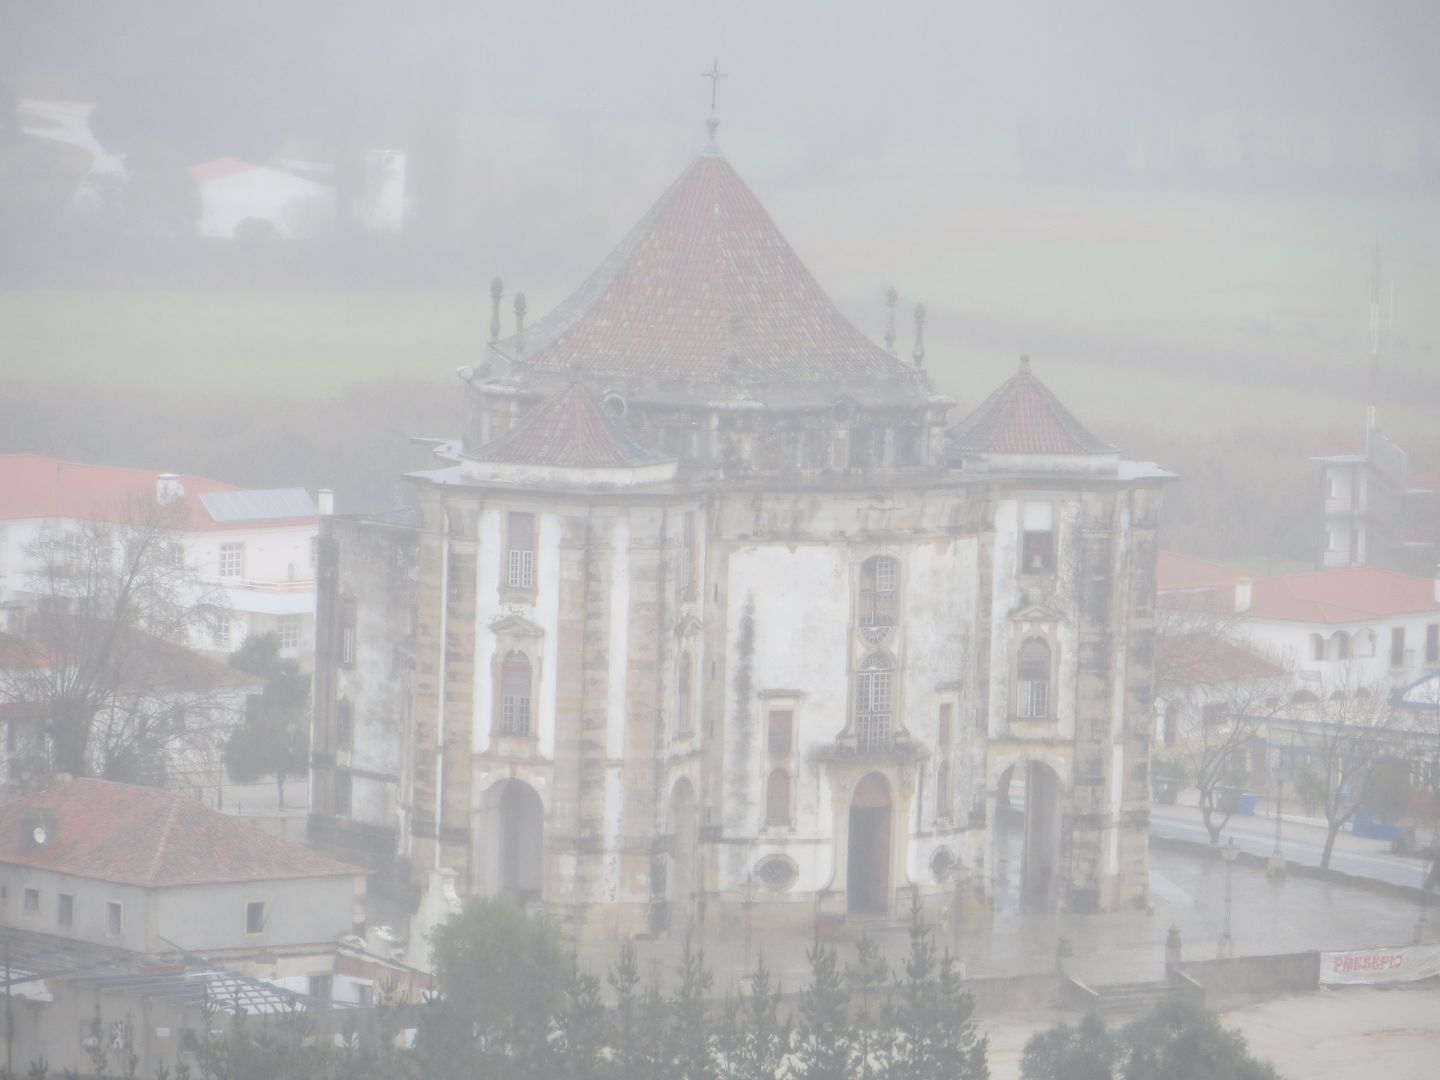 Фотографии Португалии. Синтра - Обидуш - Алкобаса - Баталья - Фатима. Январь 2014